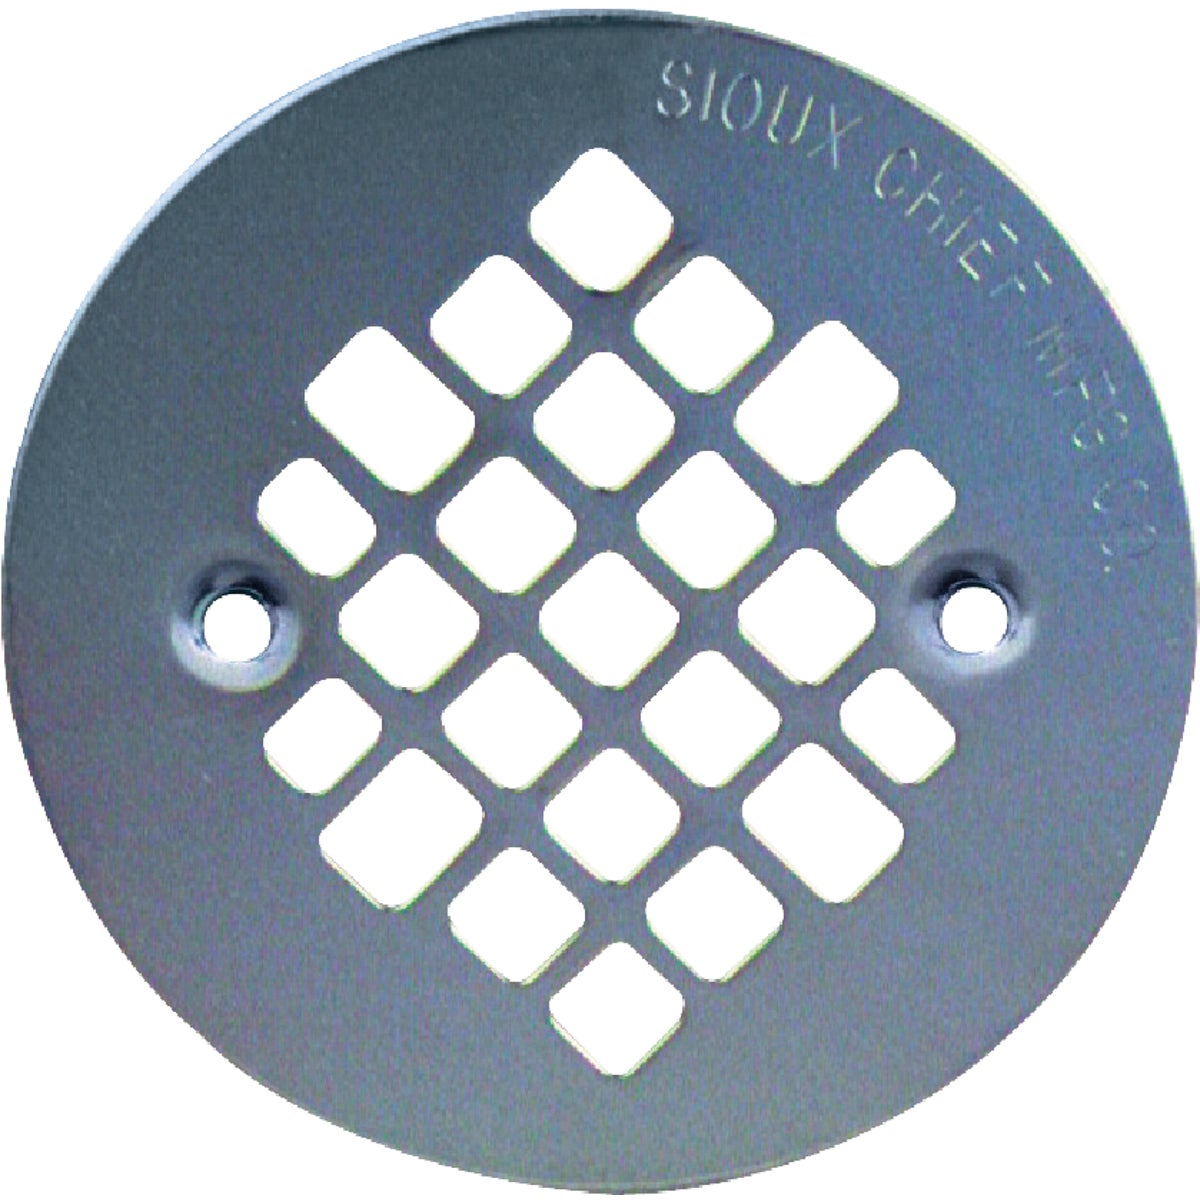 Item 464554, 4-1/4" 18-gauge stainless steel shower strainer with screws.